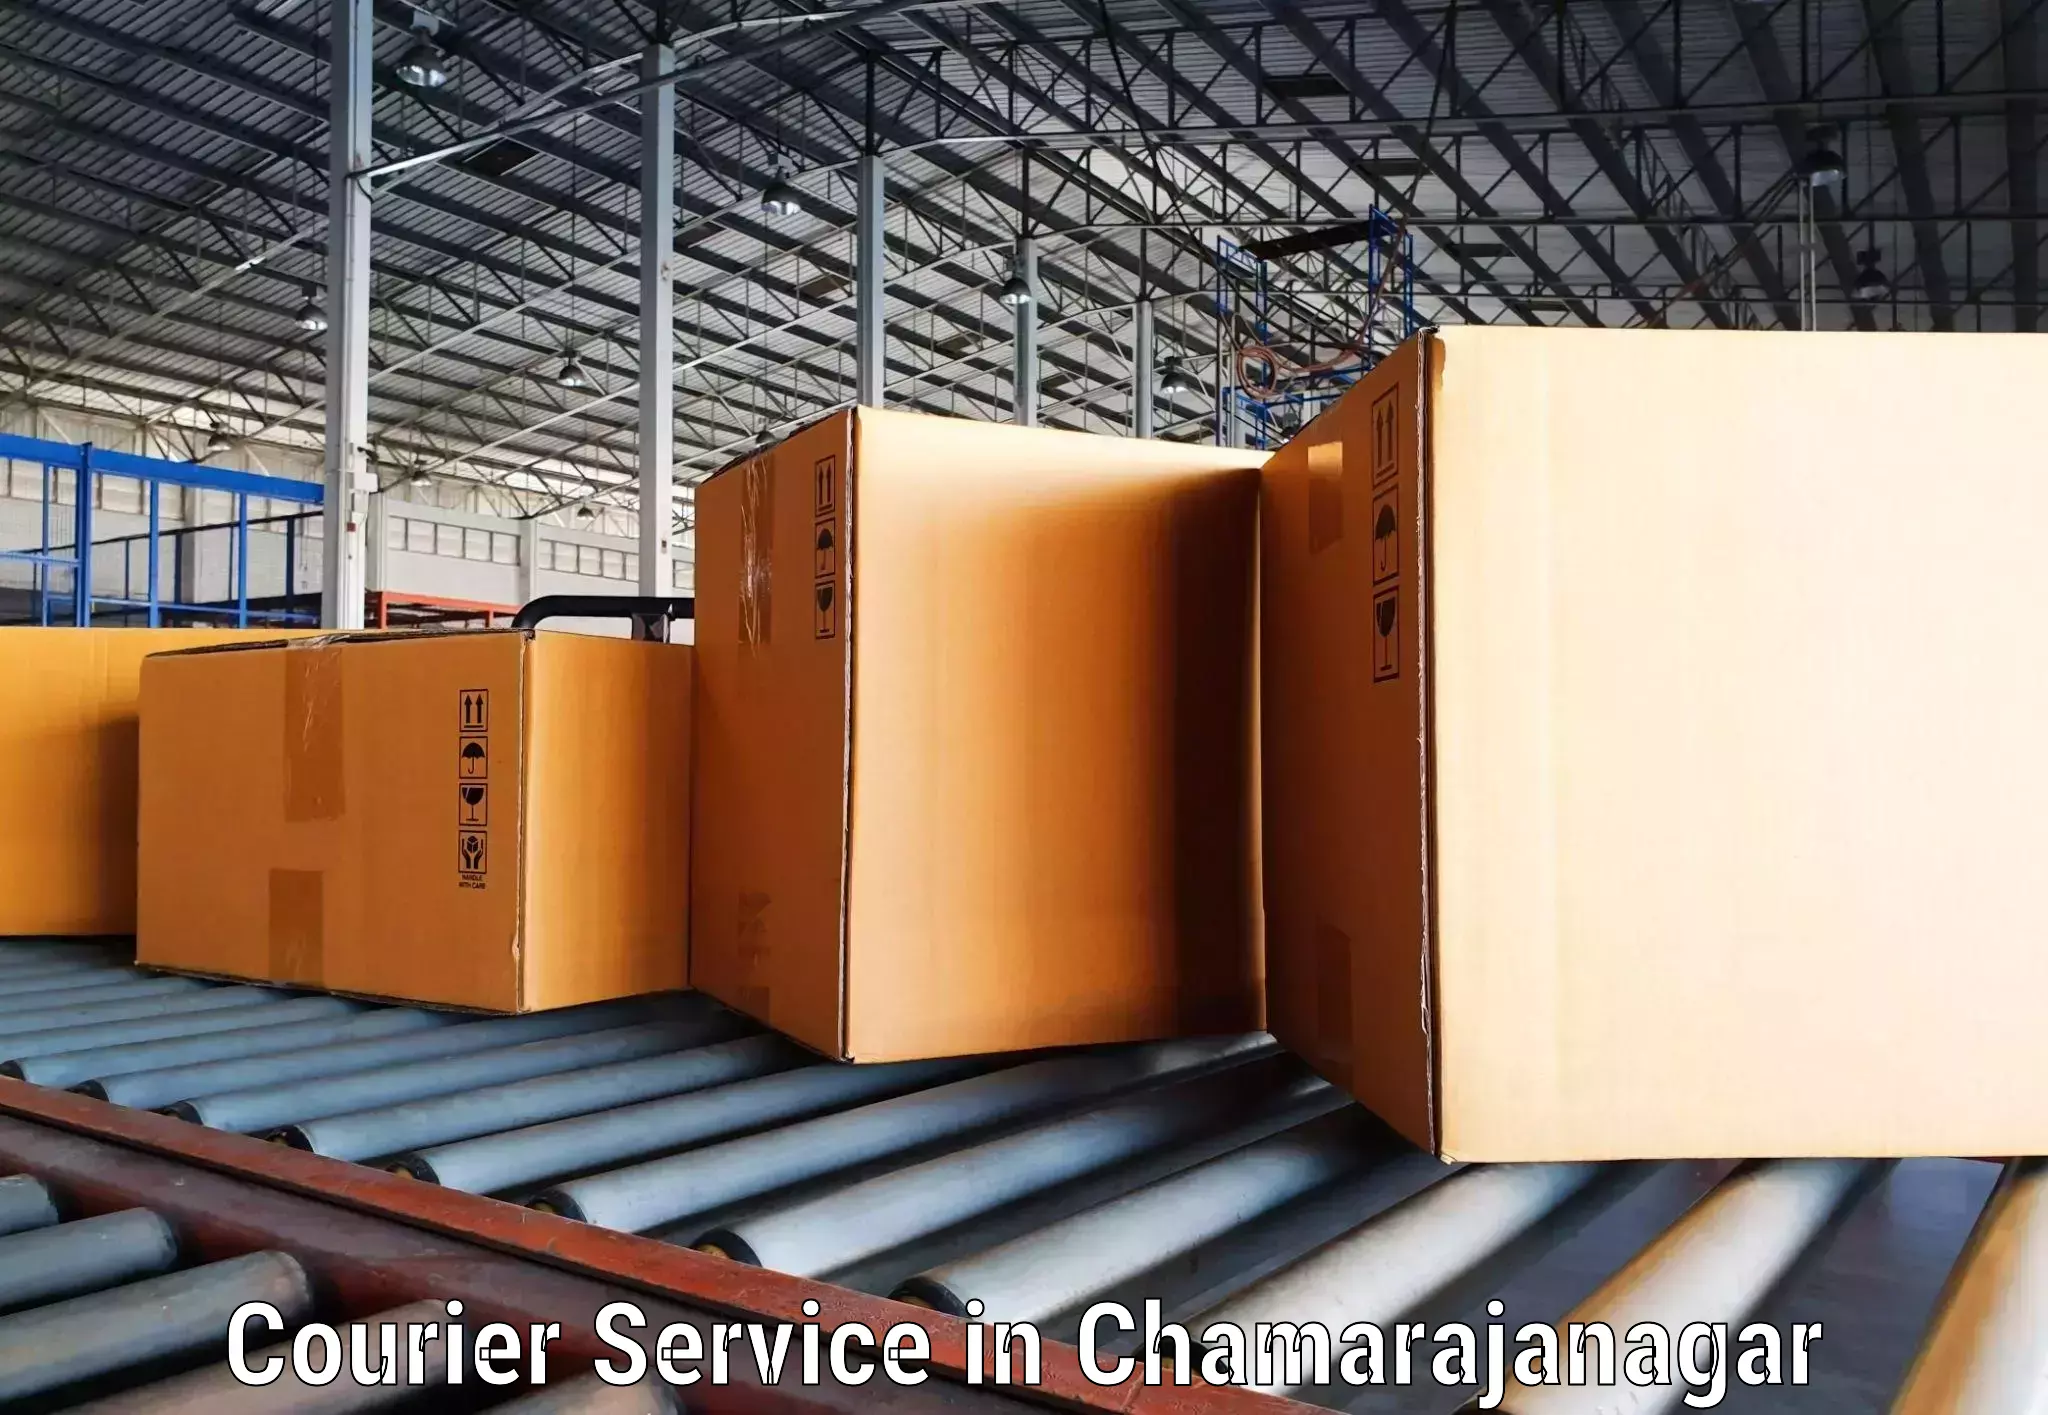 Advanced delivery network in Chamarajanagar